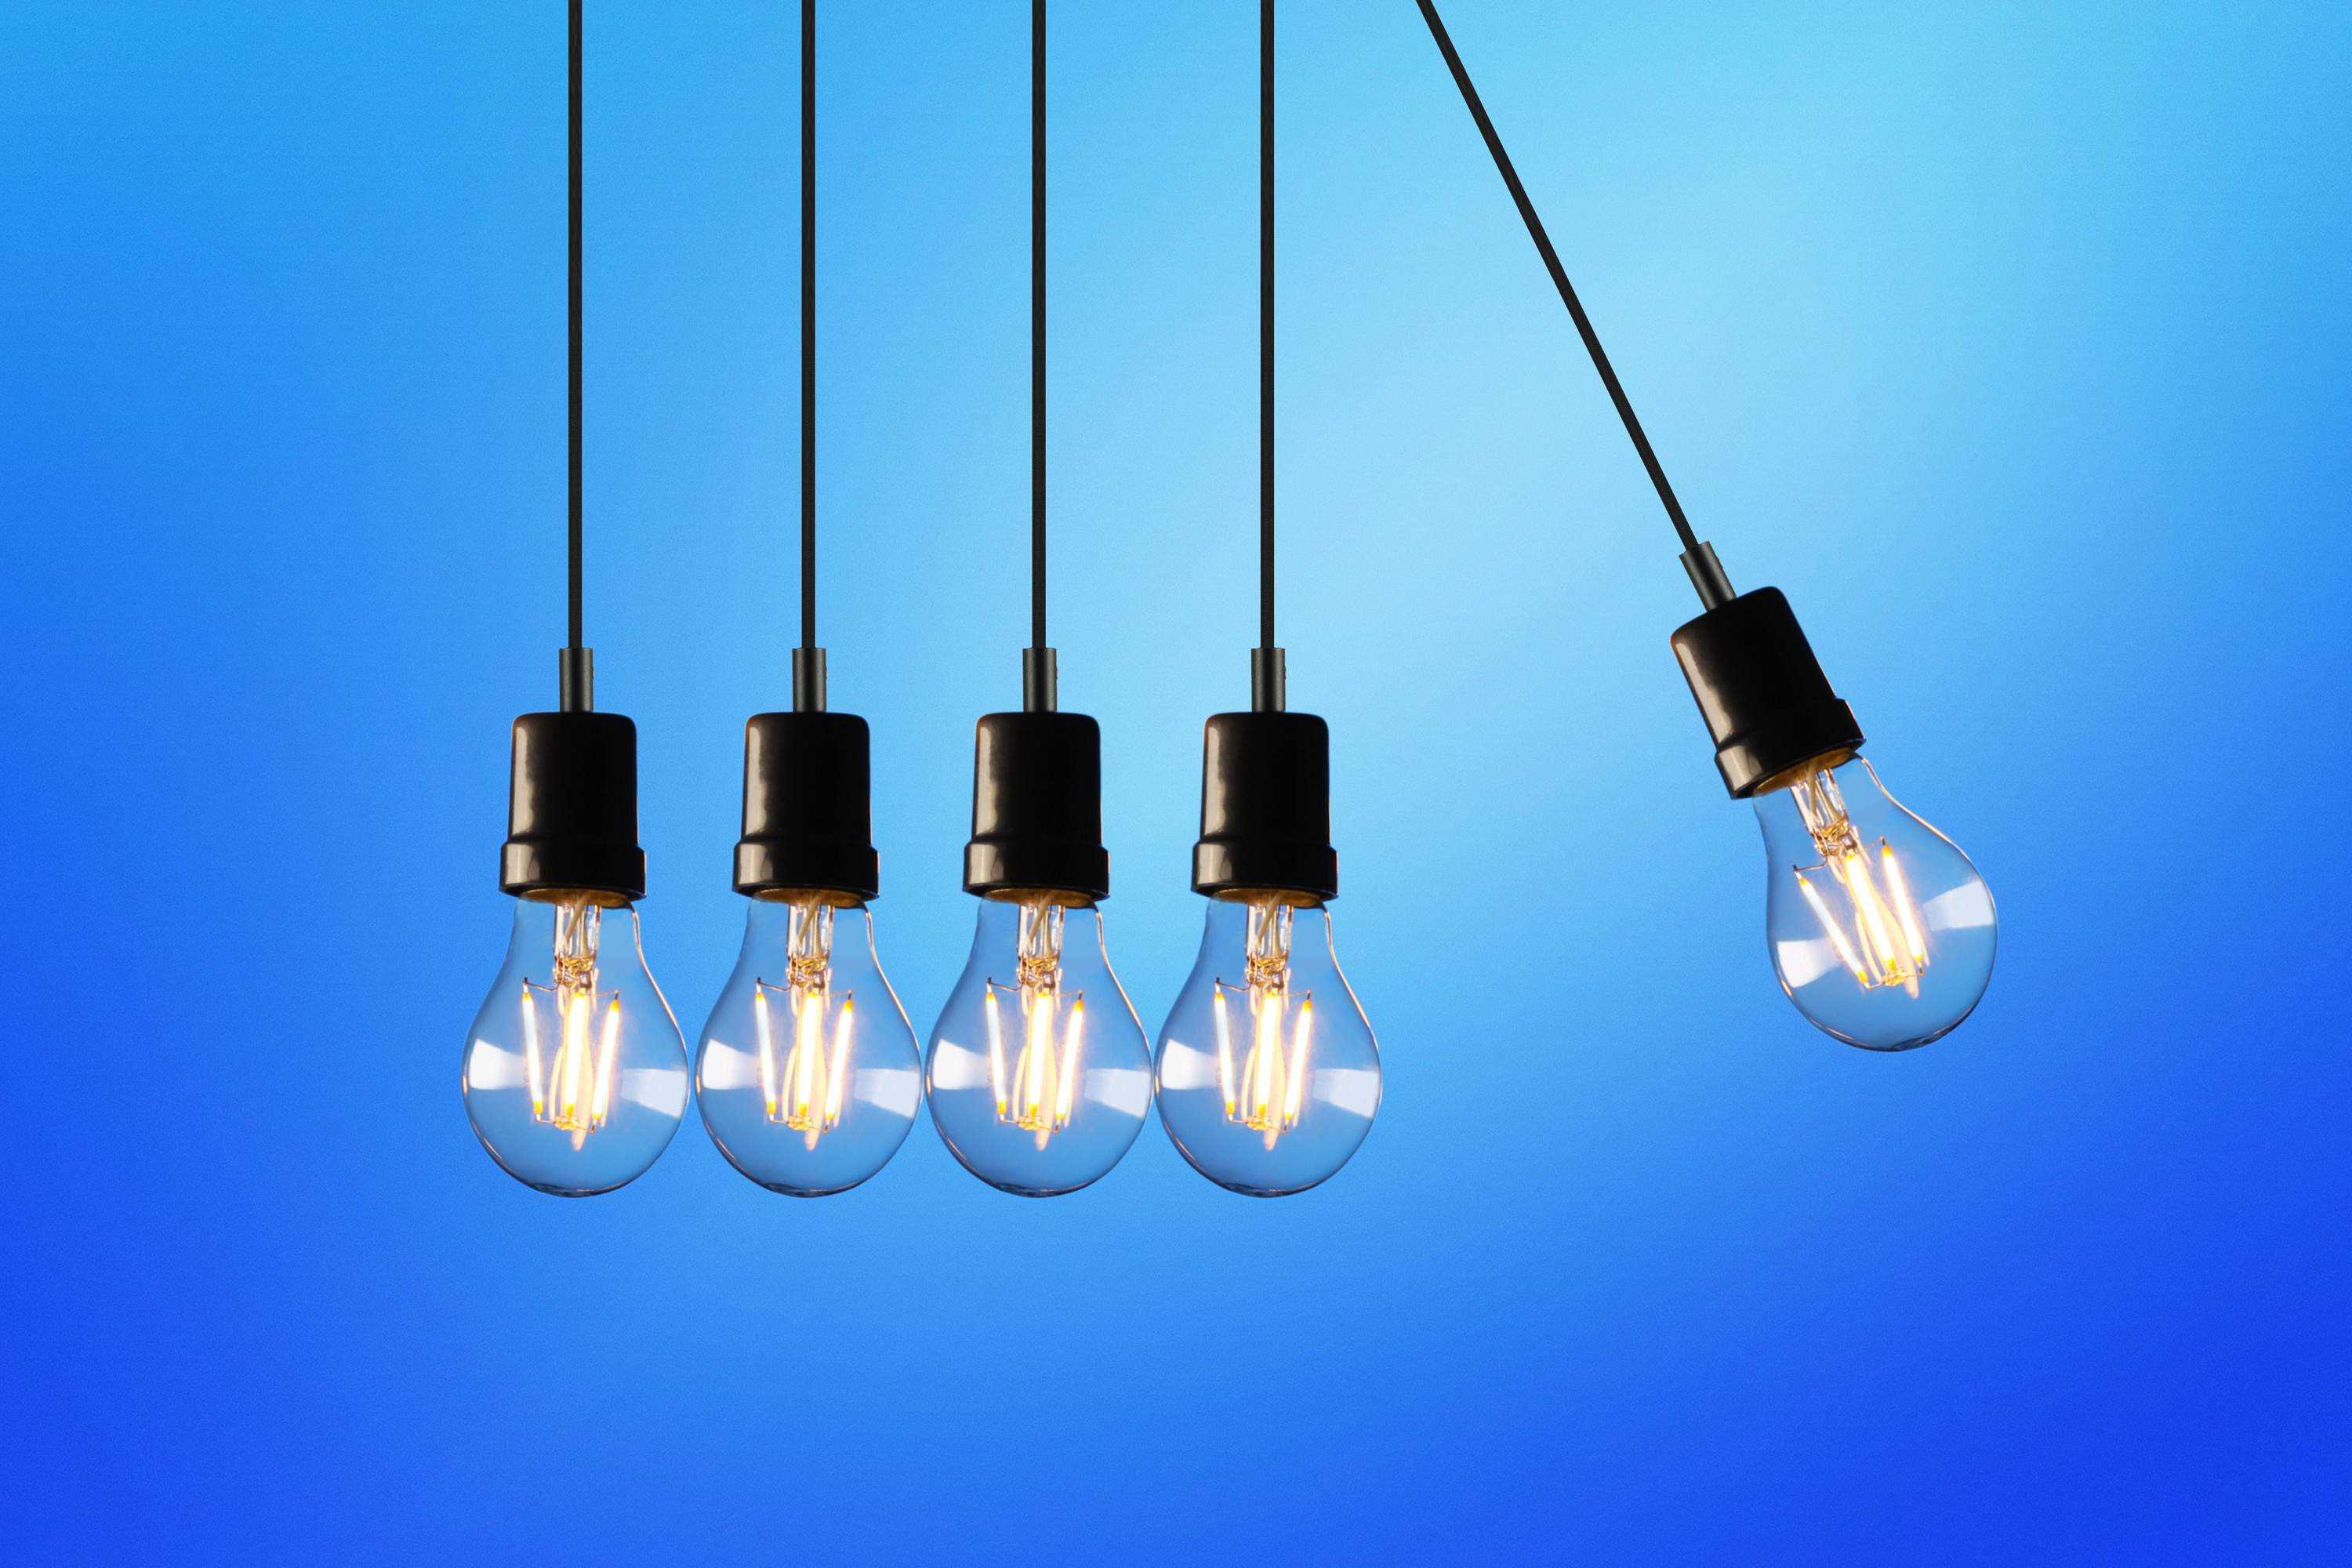 Lightbulbs hanging in a line